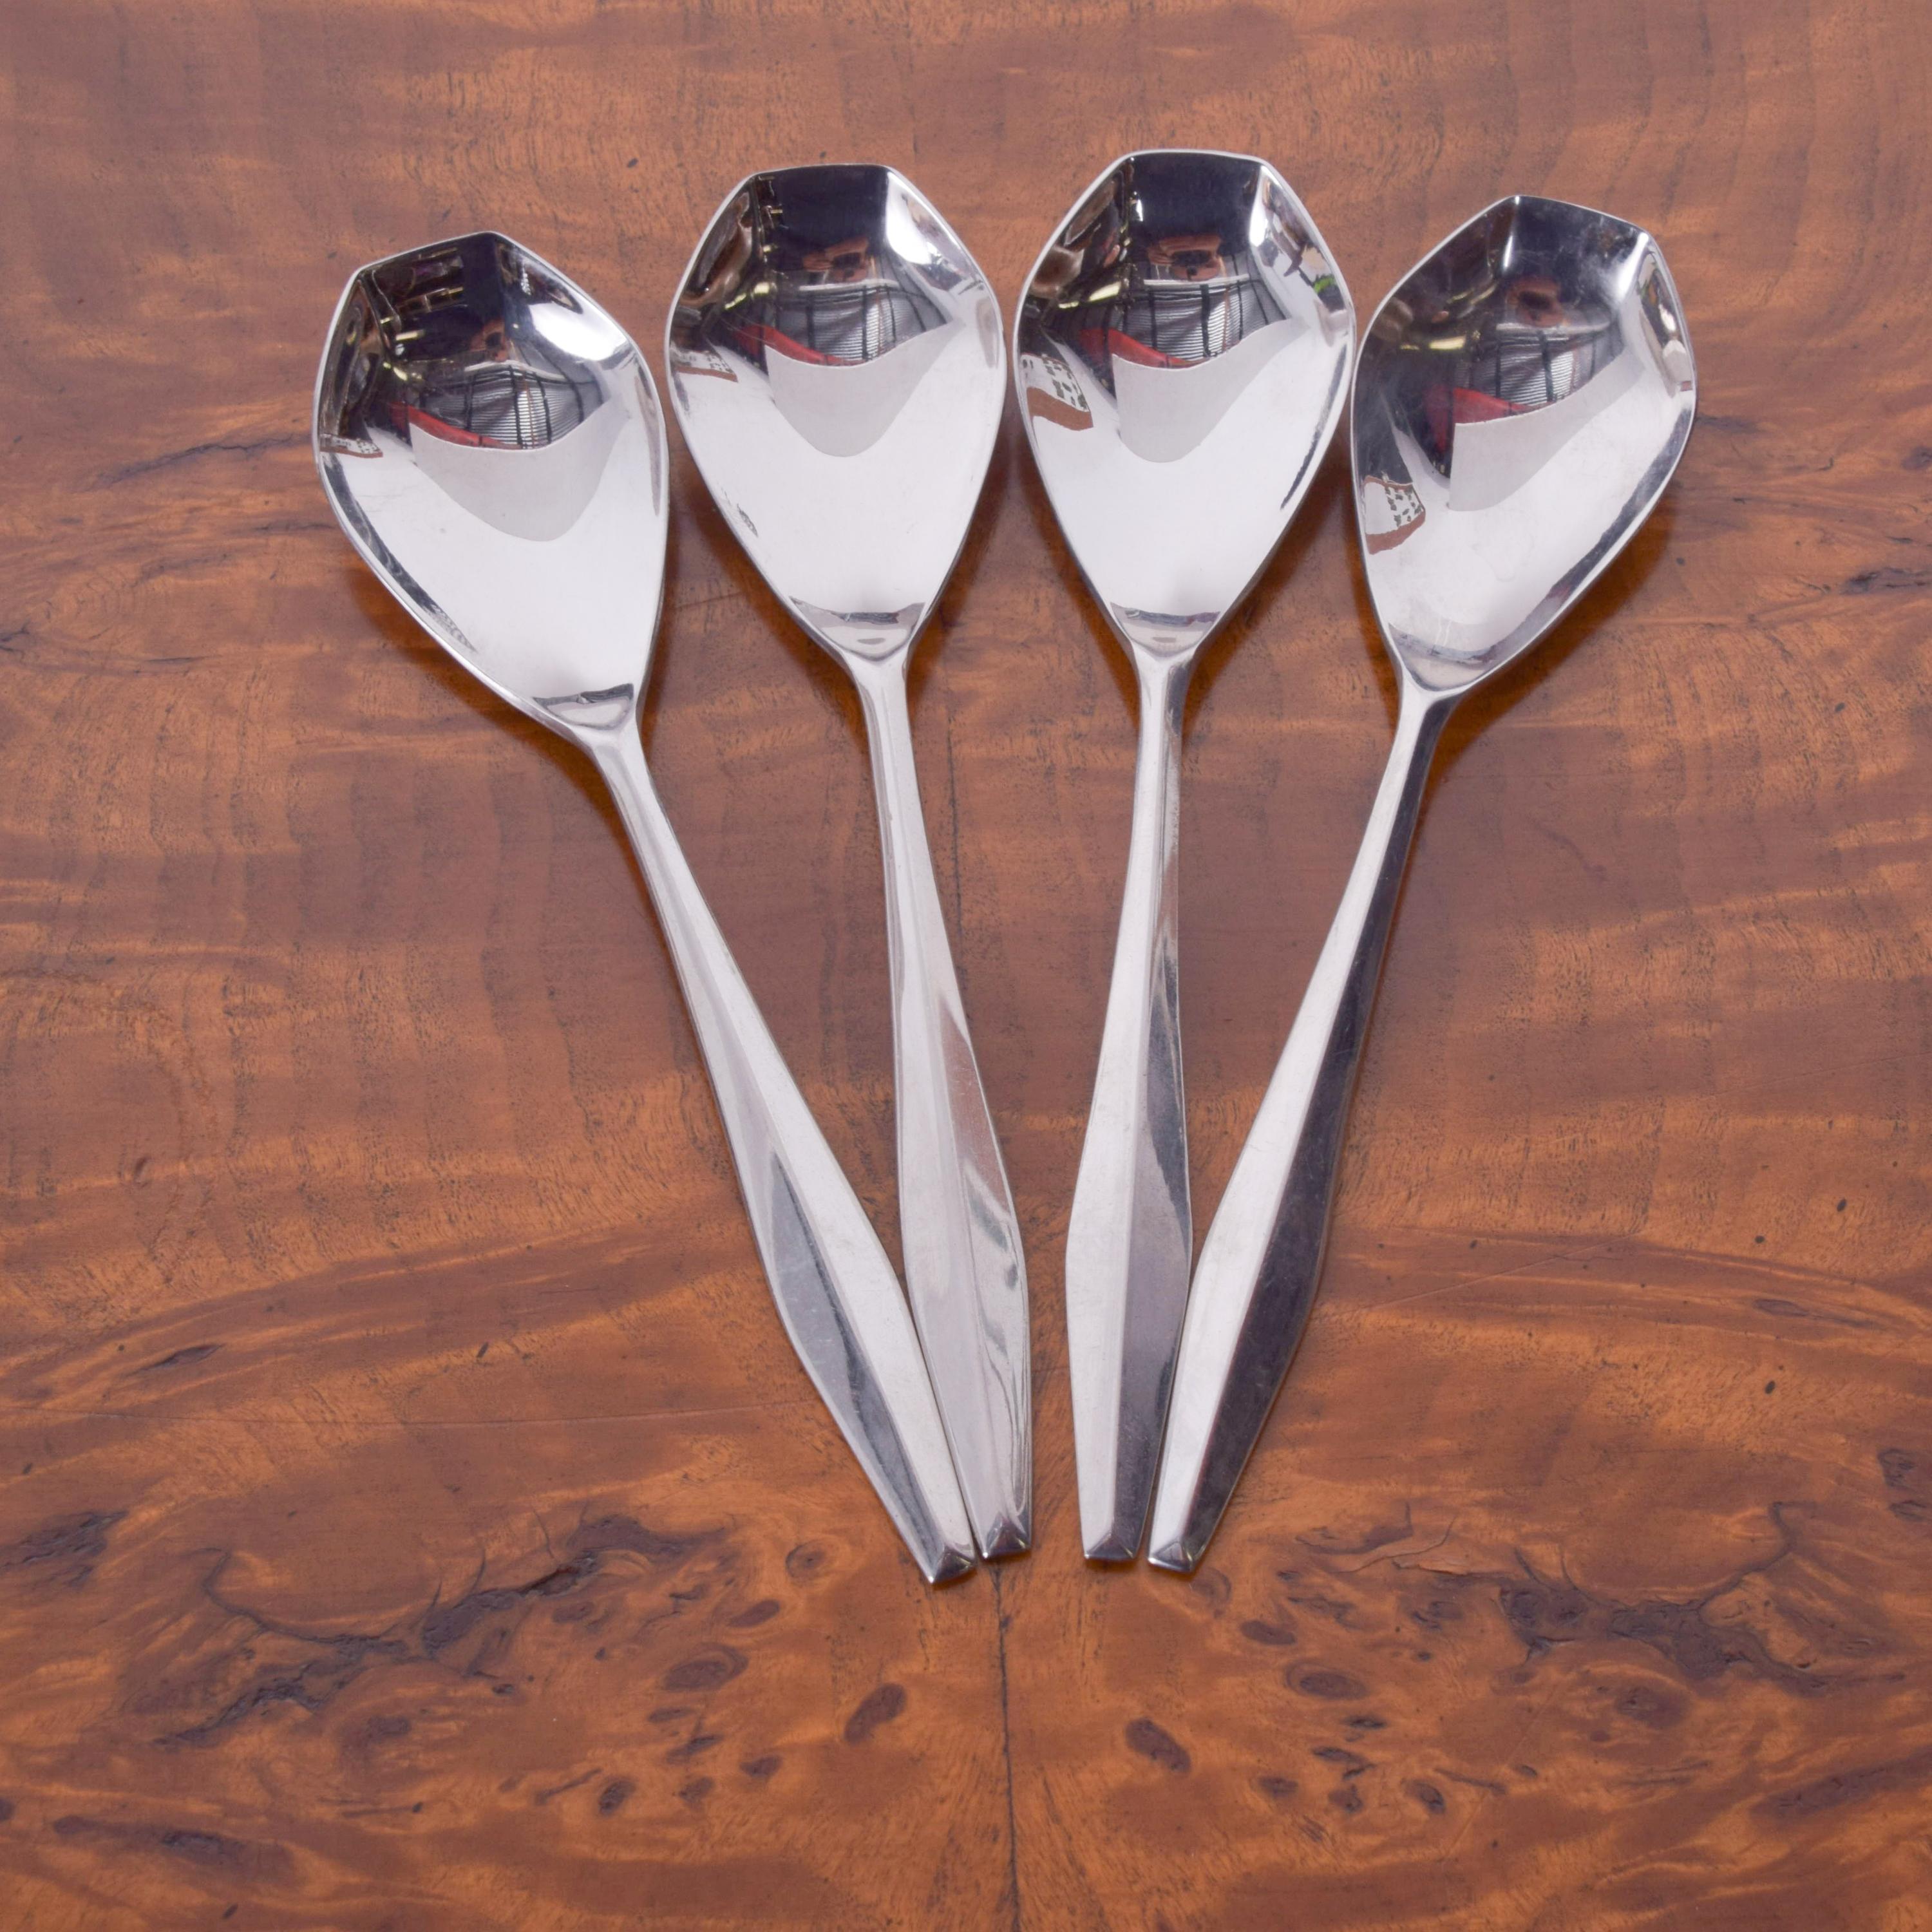 Italian designer Gio Ponti stainless flatware set of four diamond shape soup spoons designed for Reed & Barton, 1958
Measures: 7 1/2